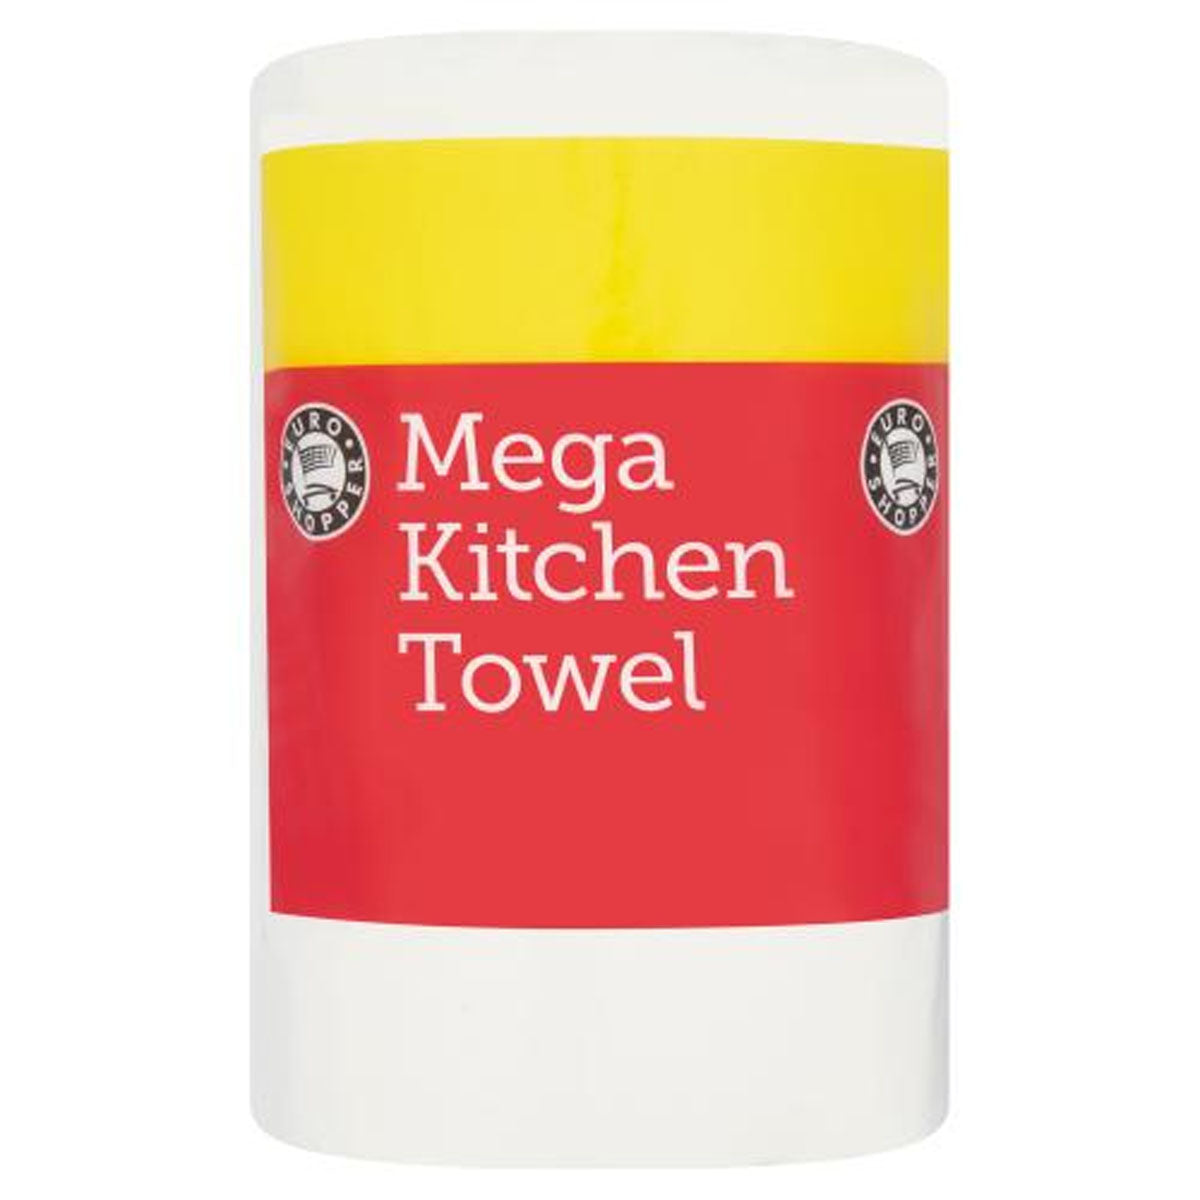 Euro Shopper - Mega Kitchen Towel - Continental Food Store